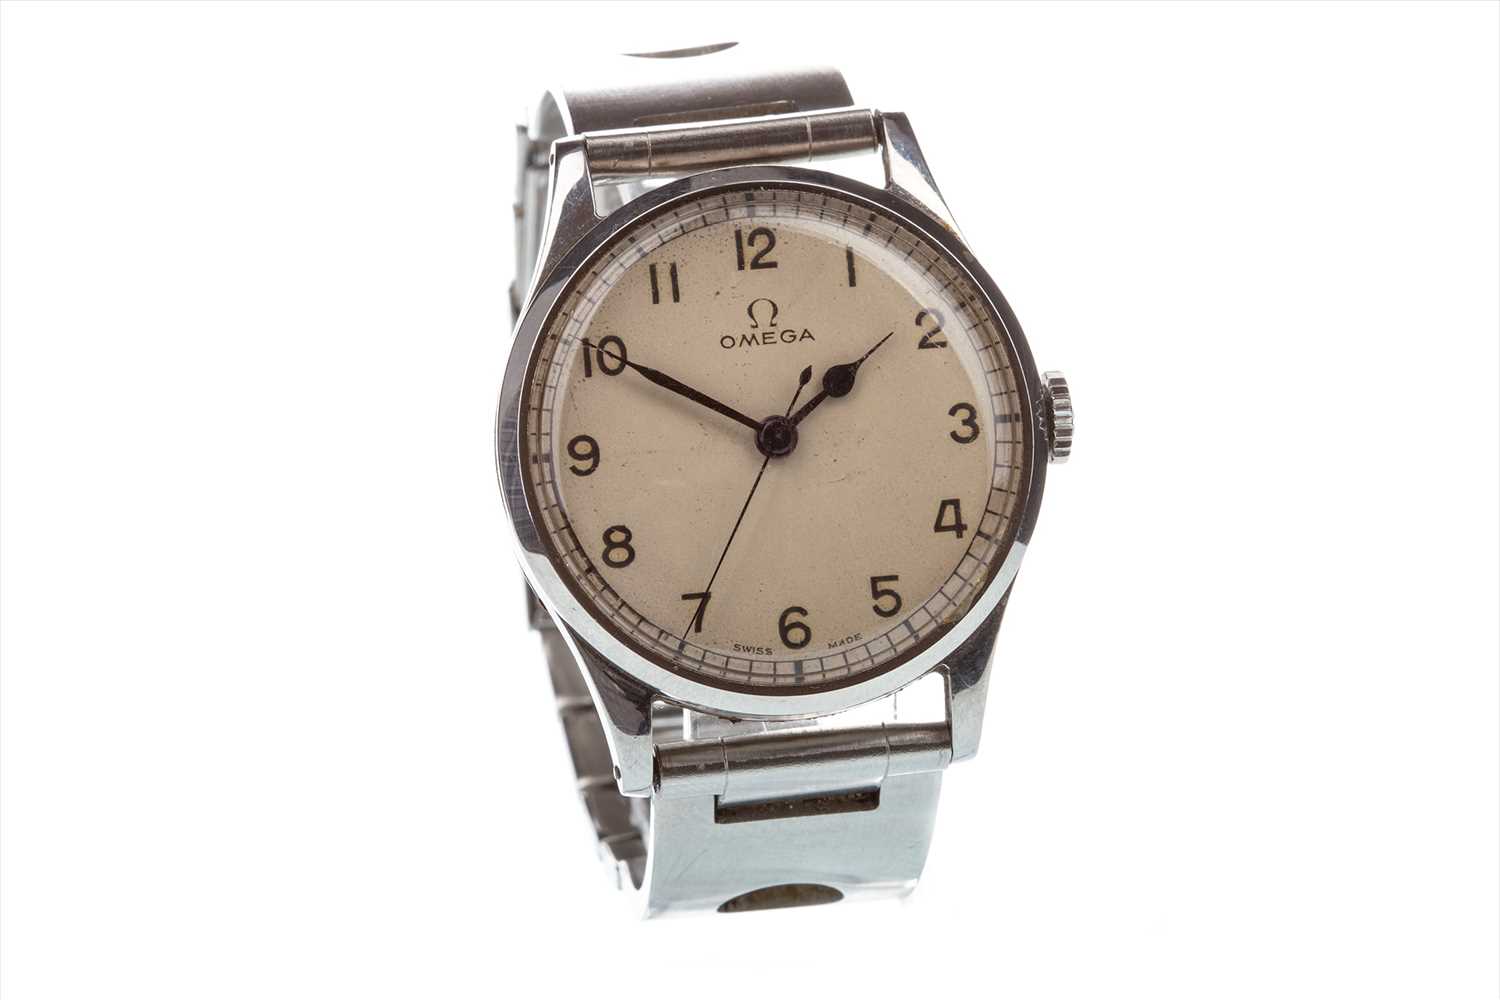 1930s Shutter Watches: A Vacheron Constantin Anomaly | by Caliber1000 |  Medium